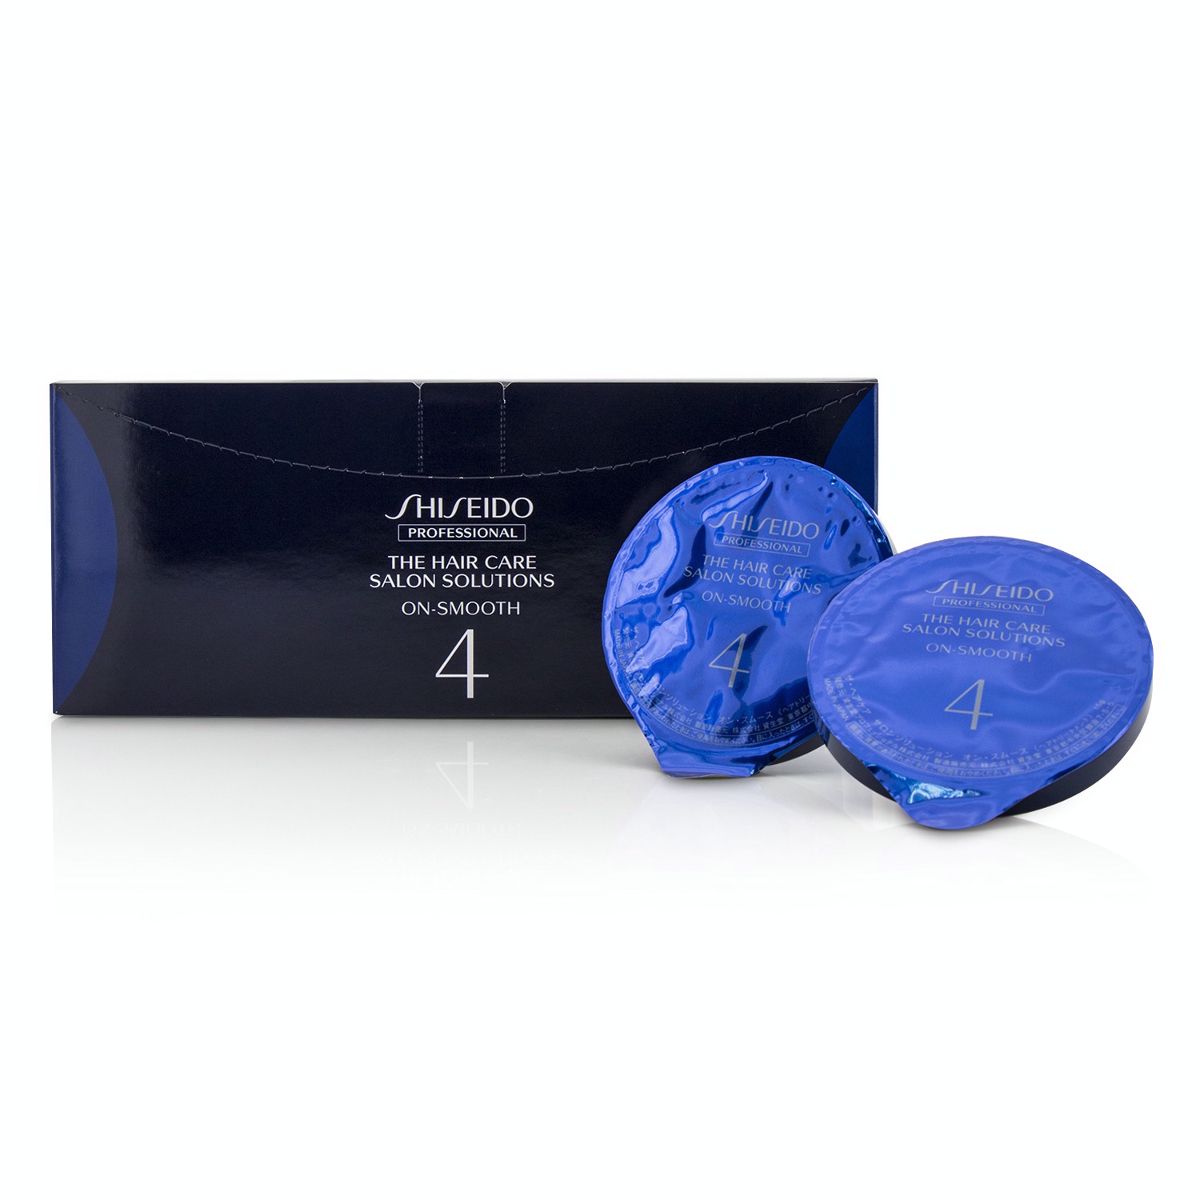 The Hair Care Salon Solutions On-Smooth (Devolumizing) Shiseido Image